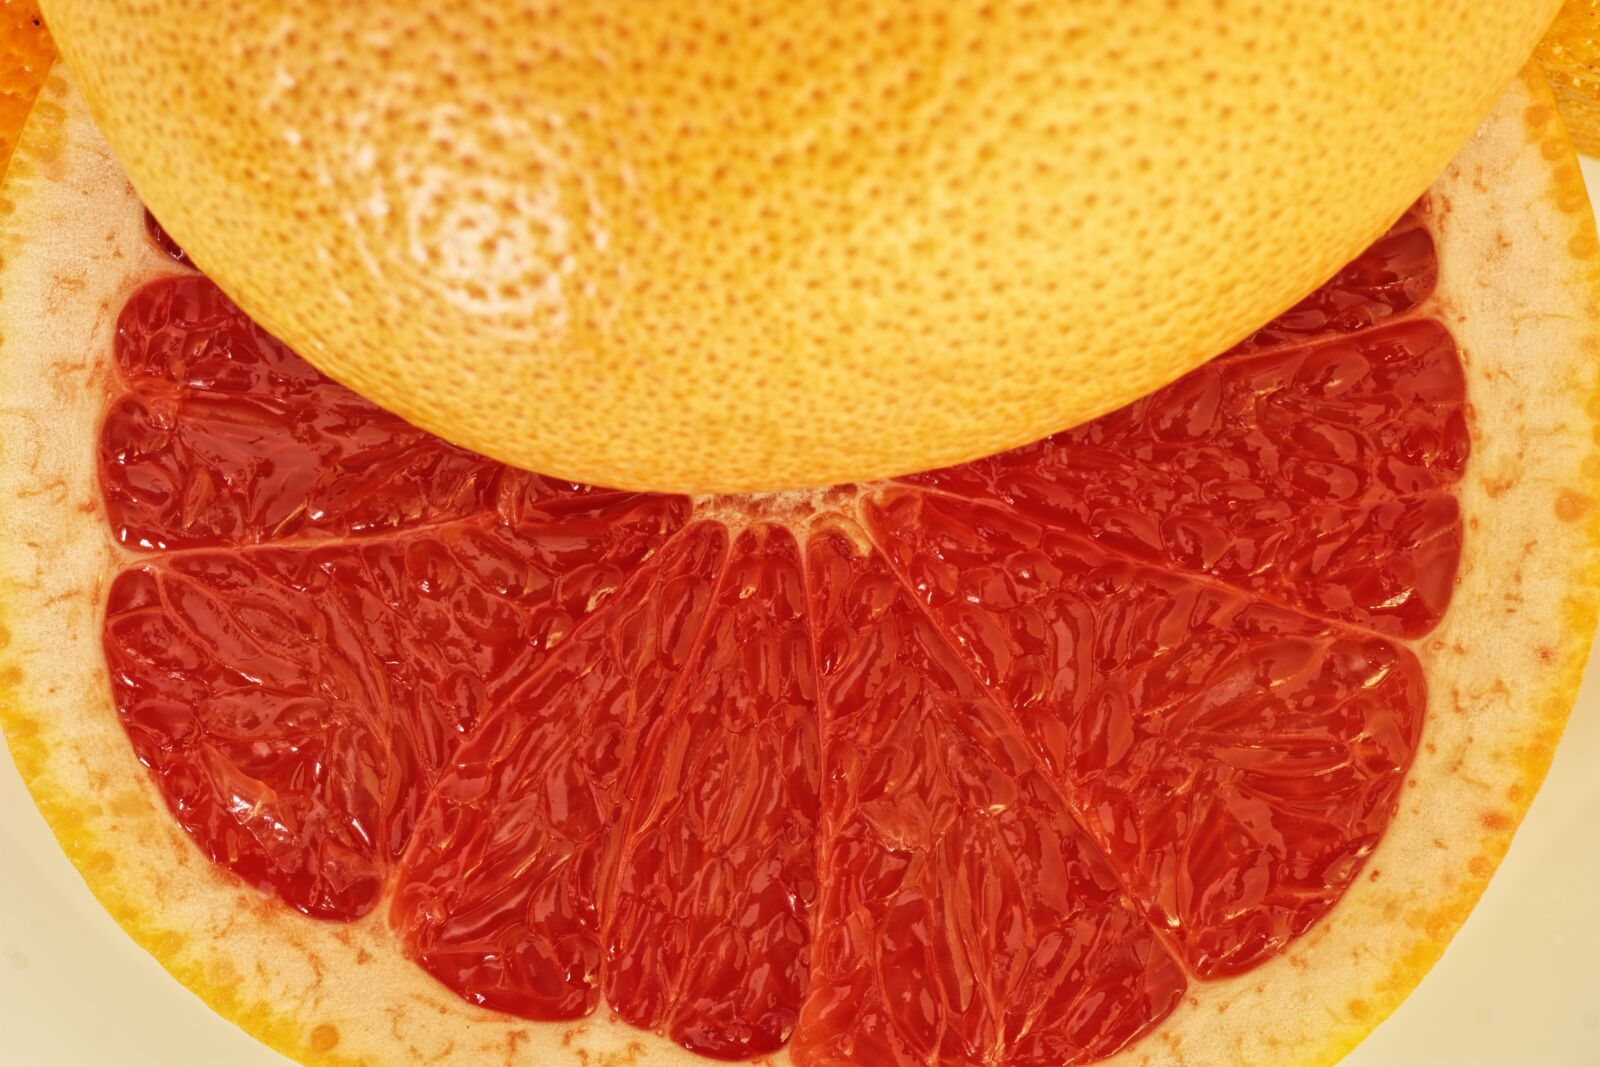 NX 60mm F2.8 Macro sample photo. Grapefruit, fruit, citrus photography